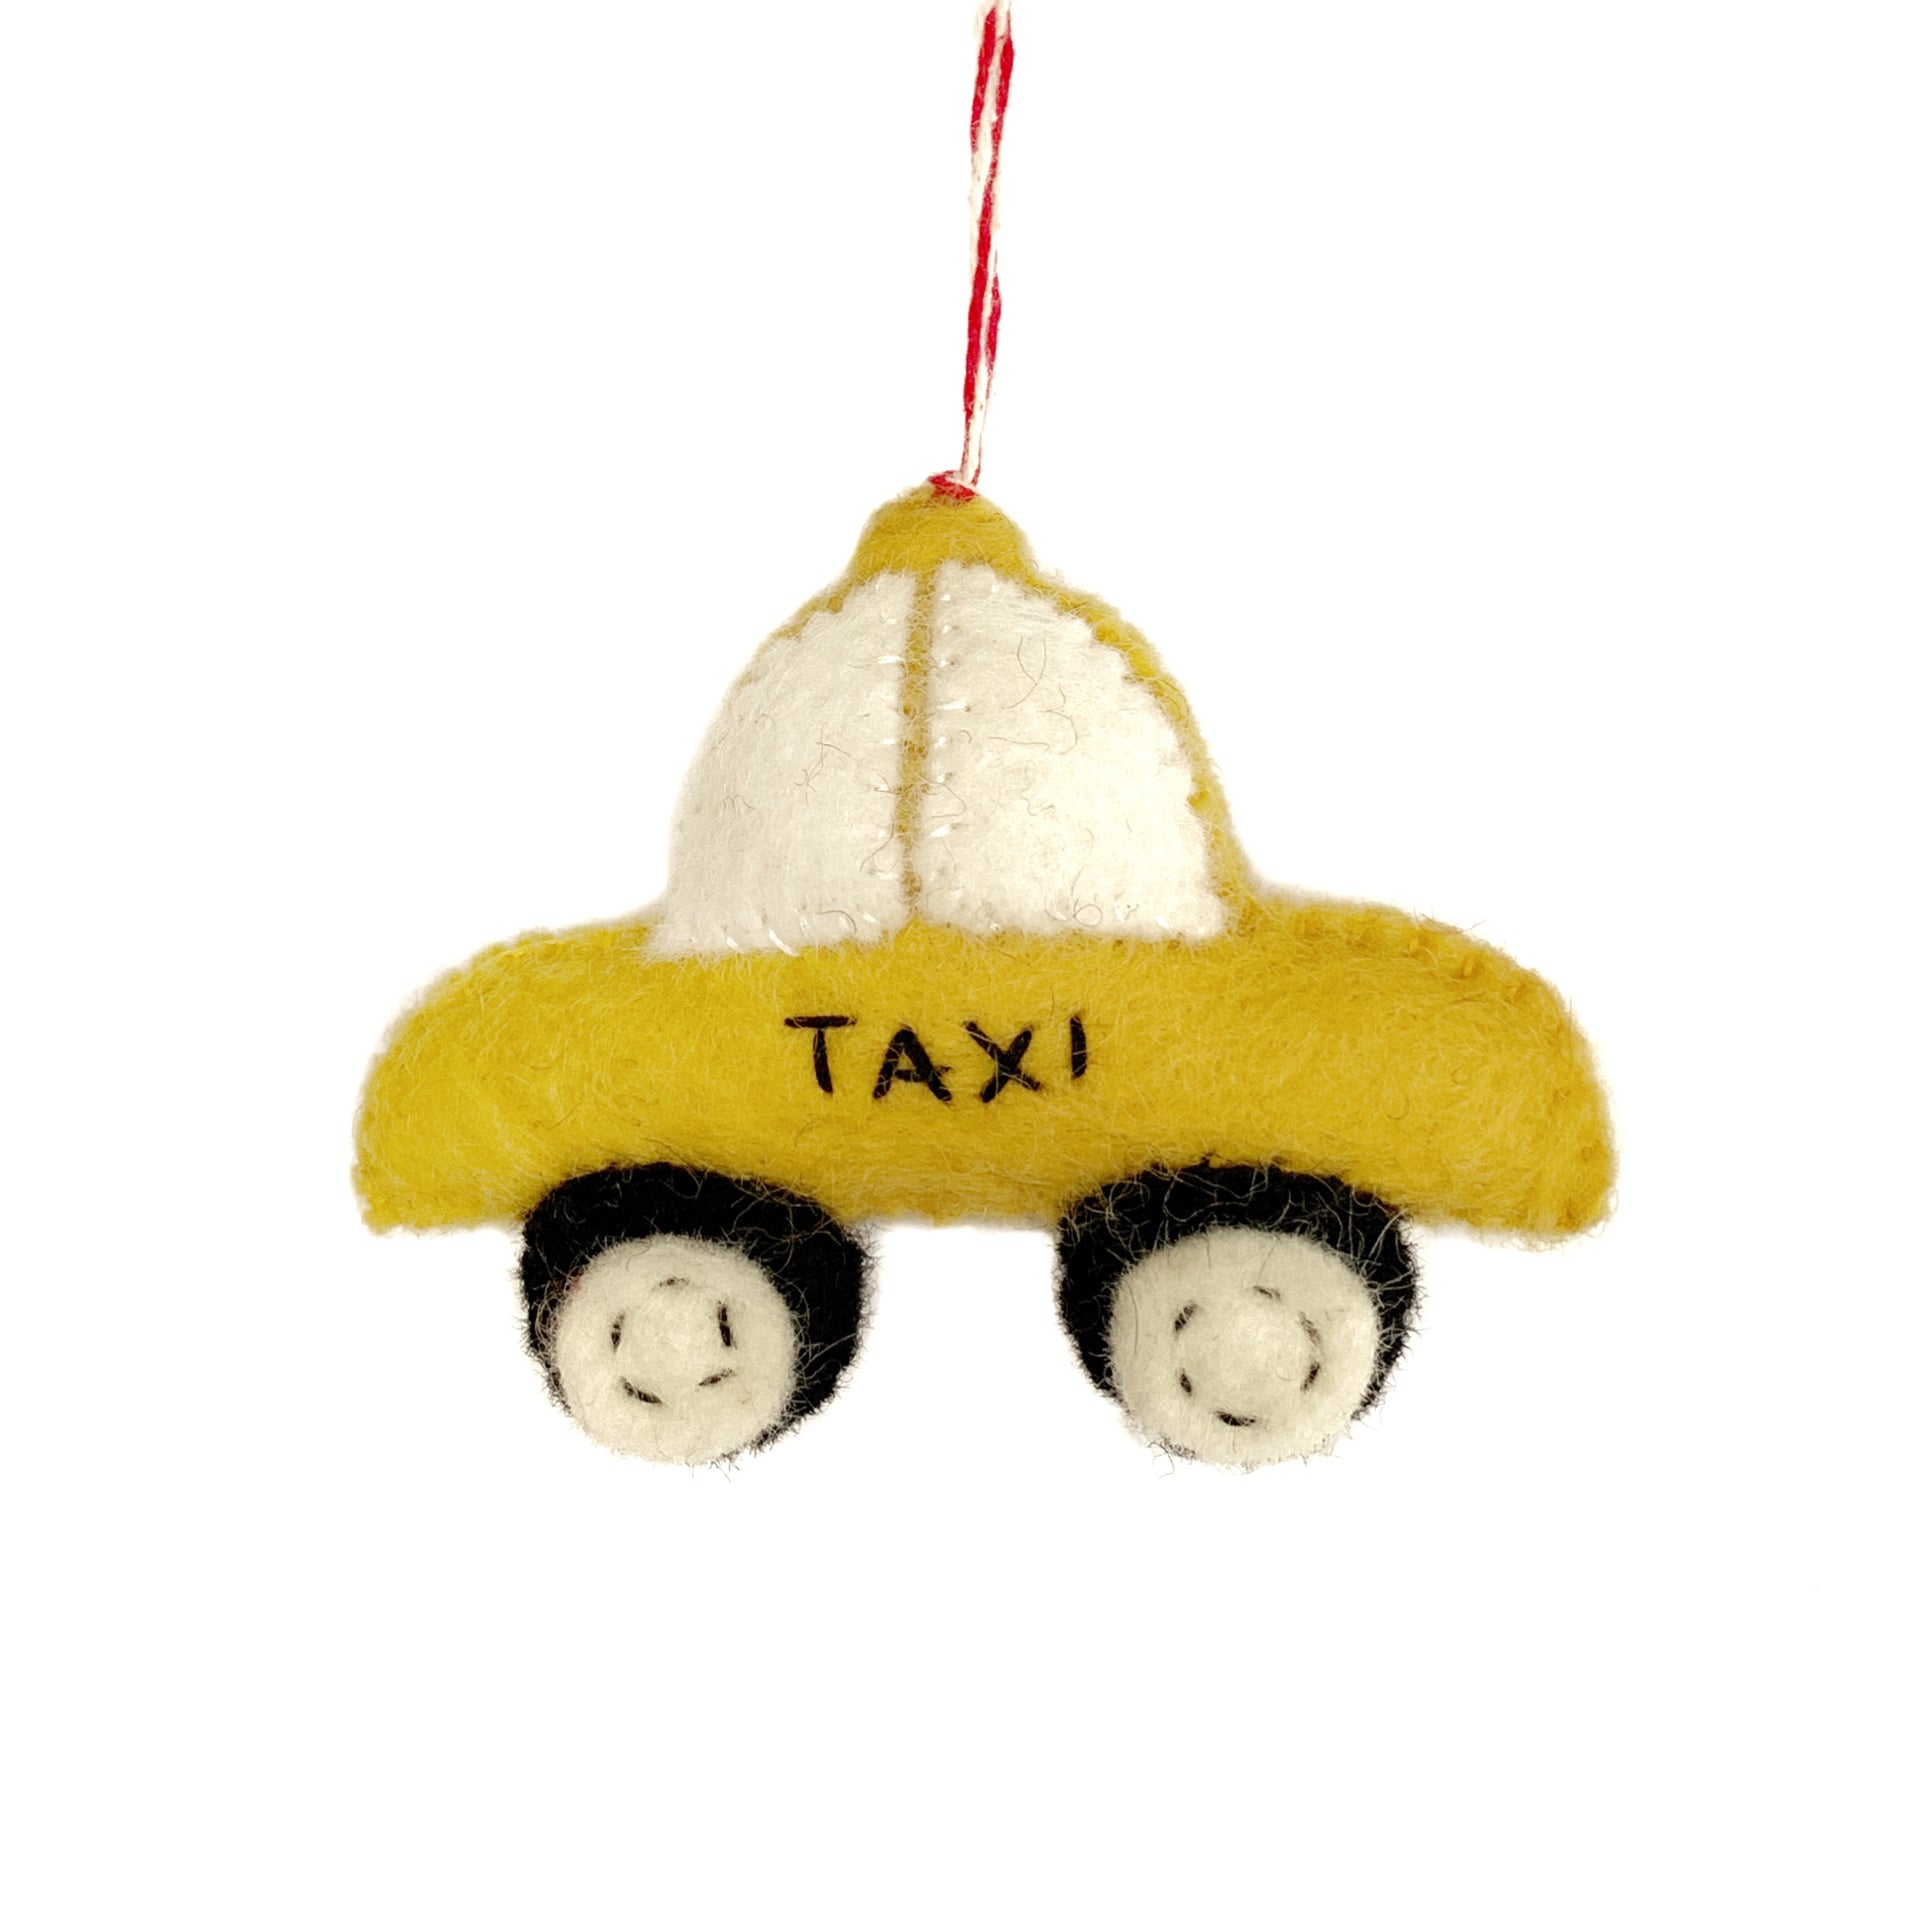 Taxi Cab Ornament, Felt Wool